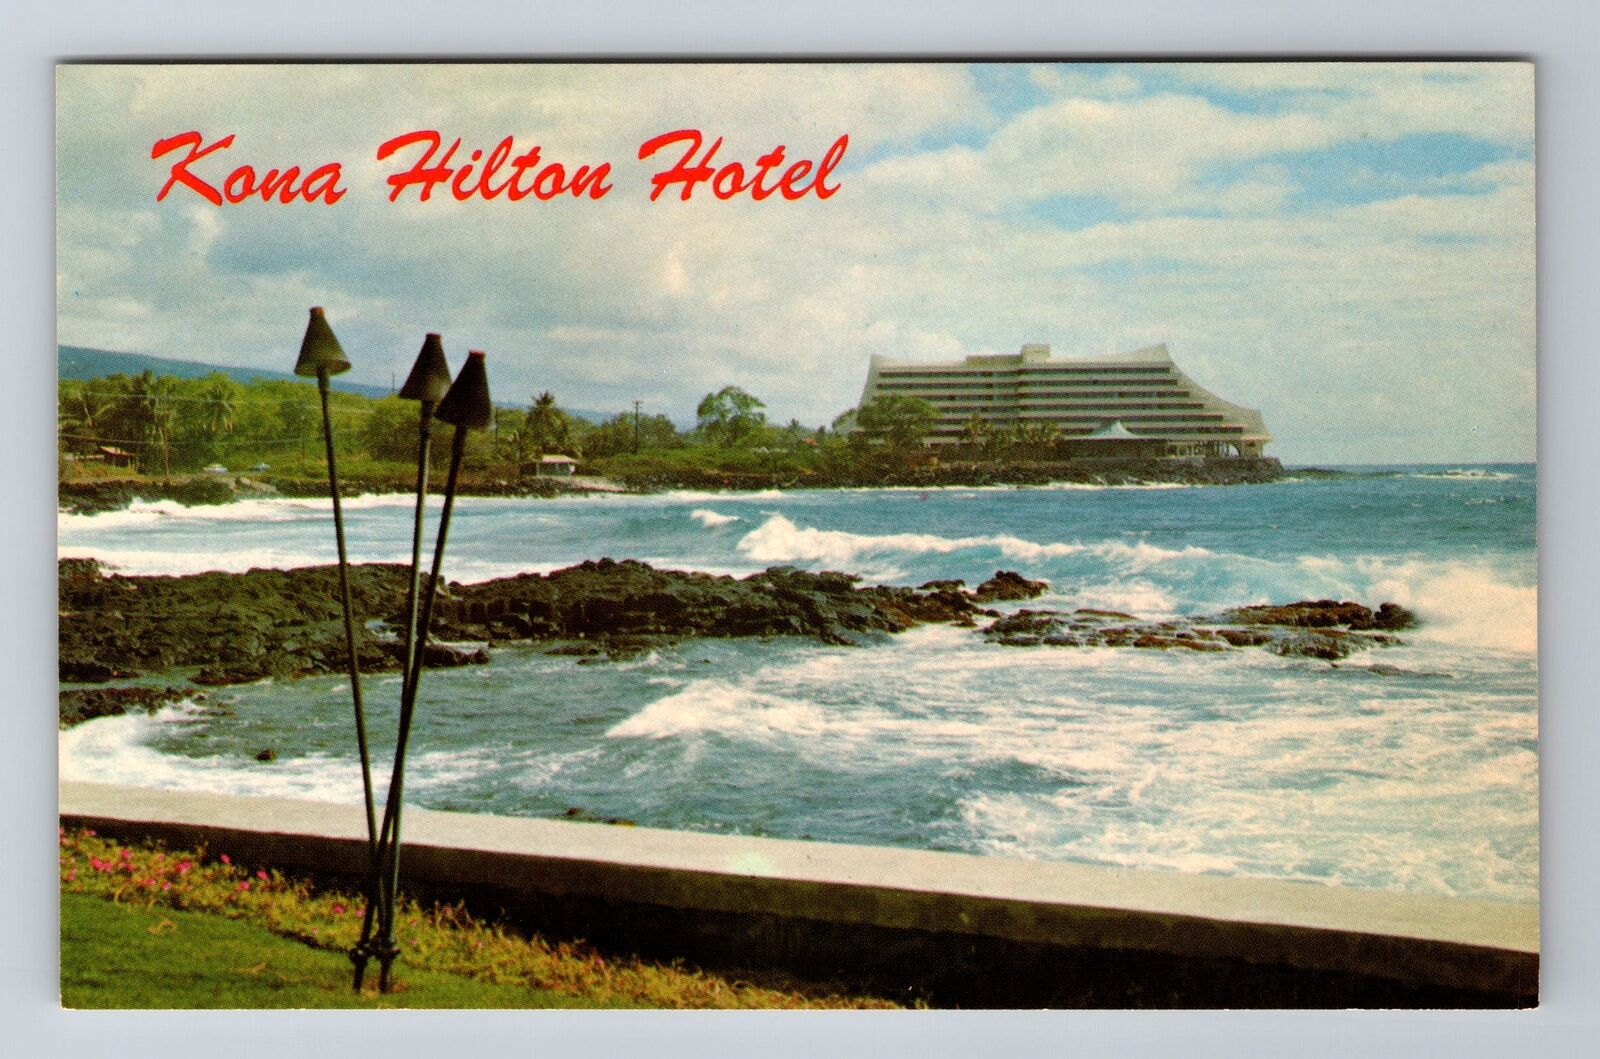 Kailua-Kona HI-Hawaii, Kona Hilton Hotel Advertising, Antique, Vintage Postcard